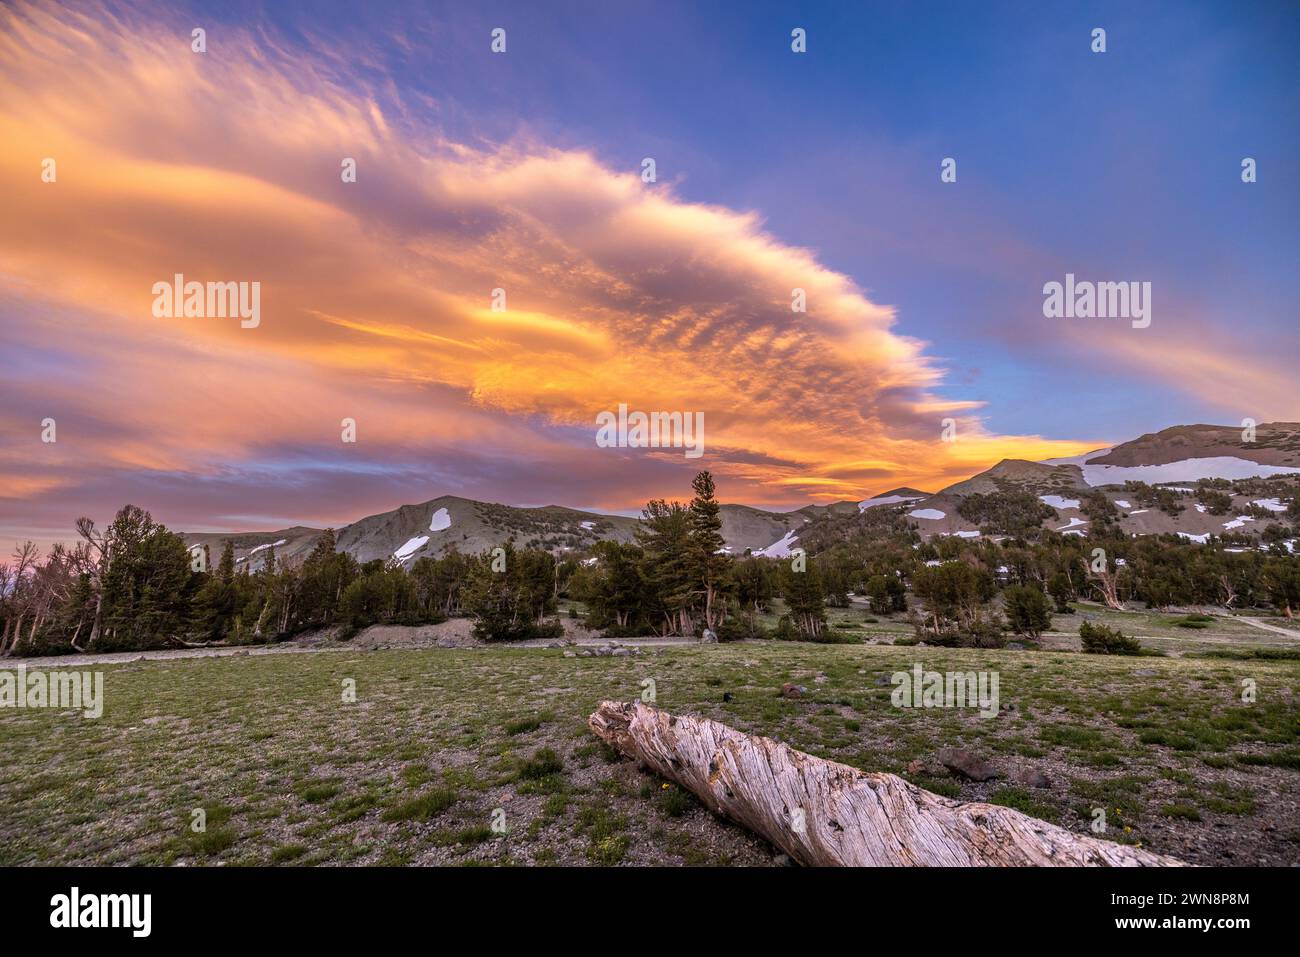 a vibrant sky overlooking a serene landscape Stock Photo